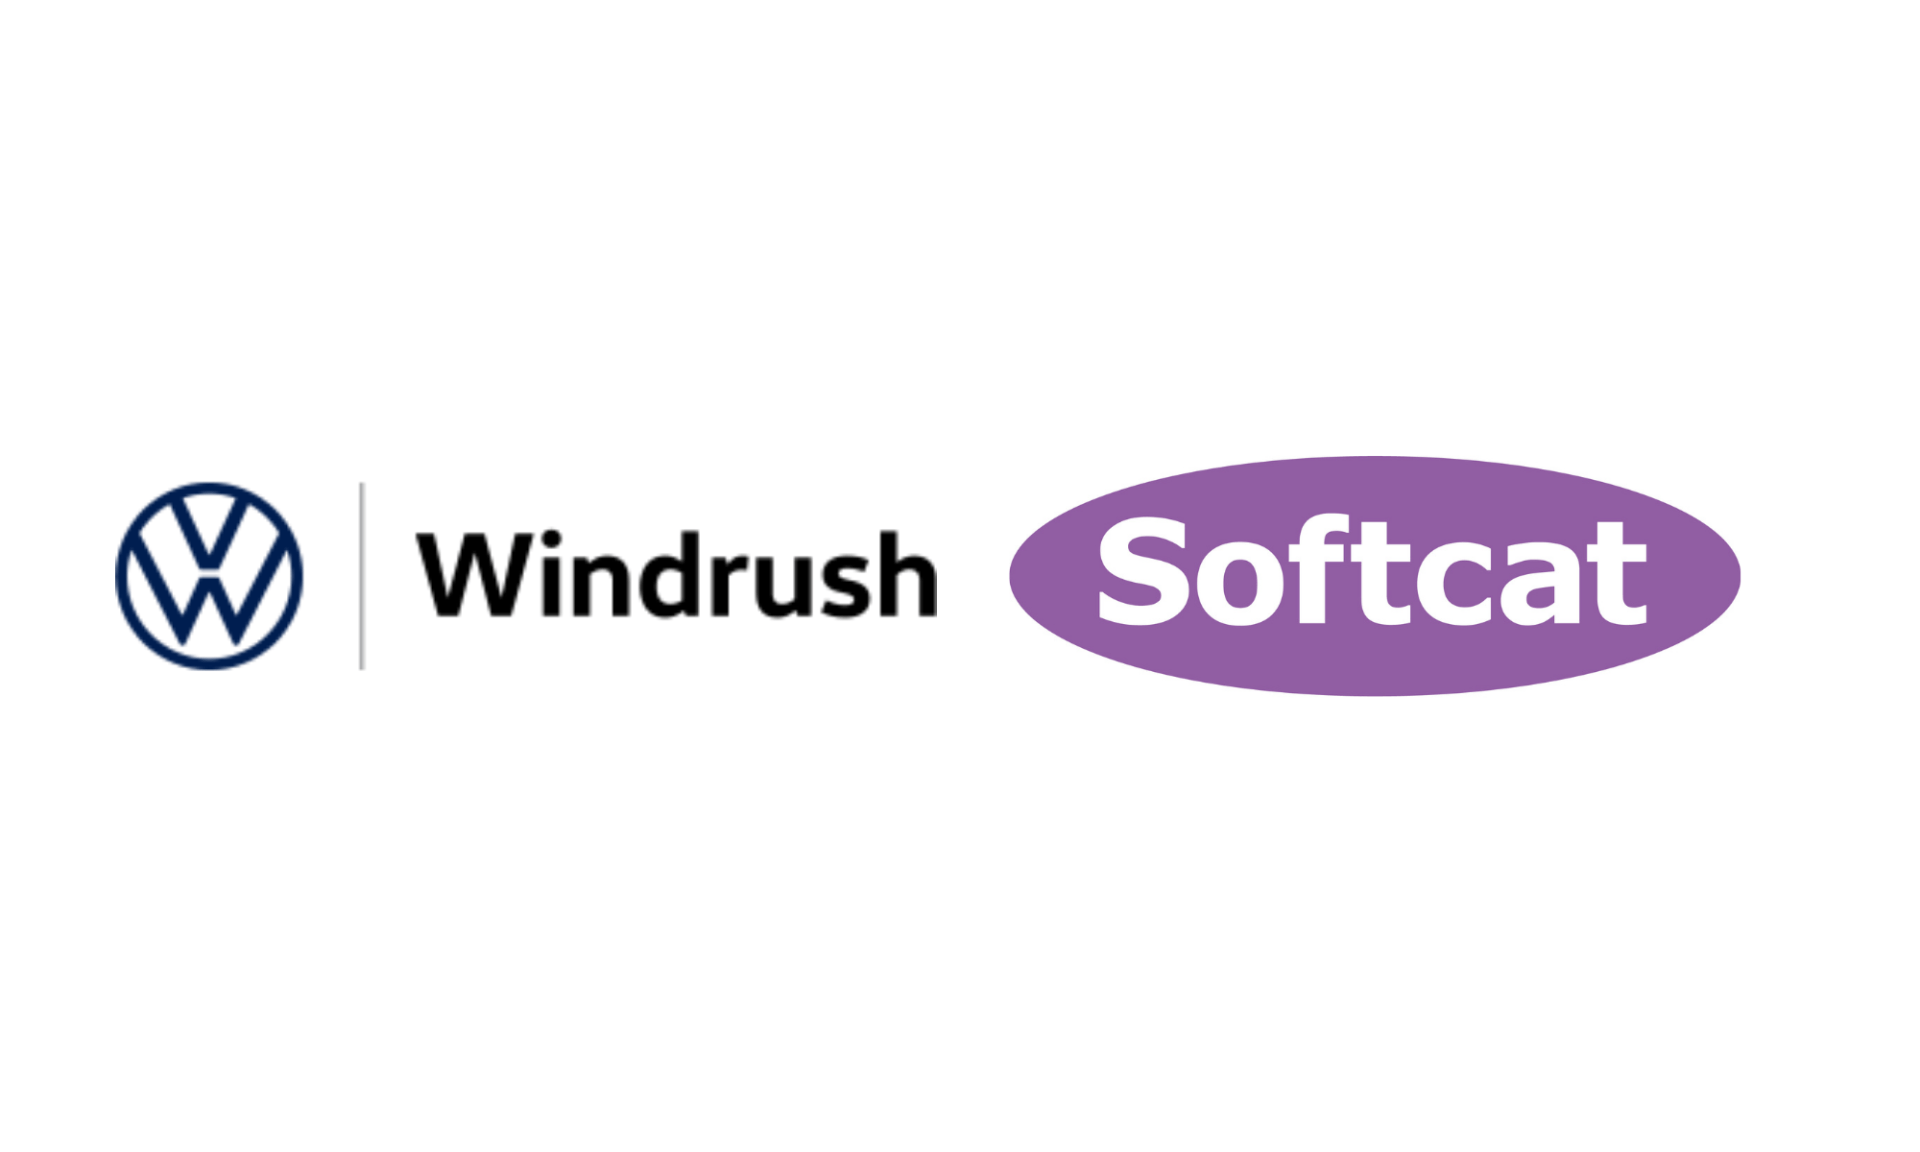 Windrush VW, Softcat